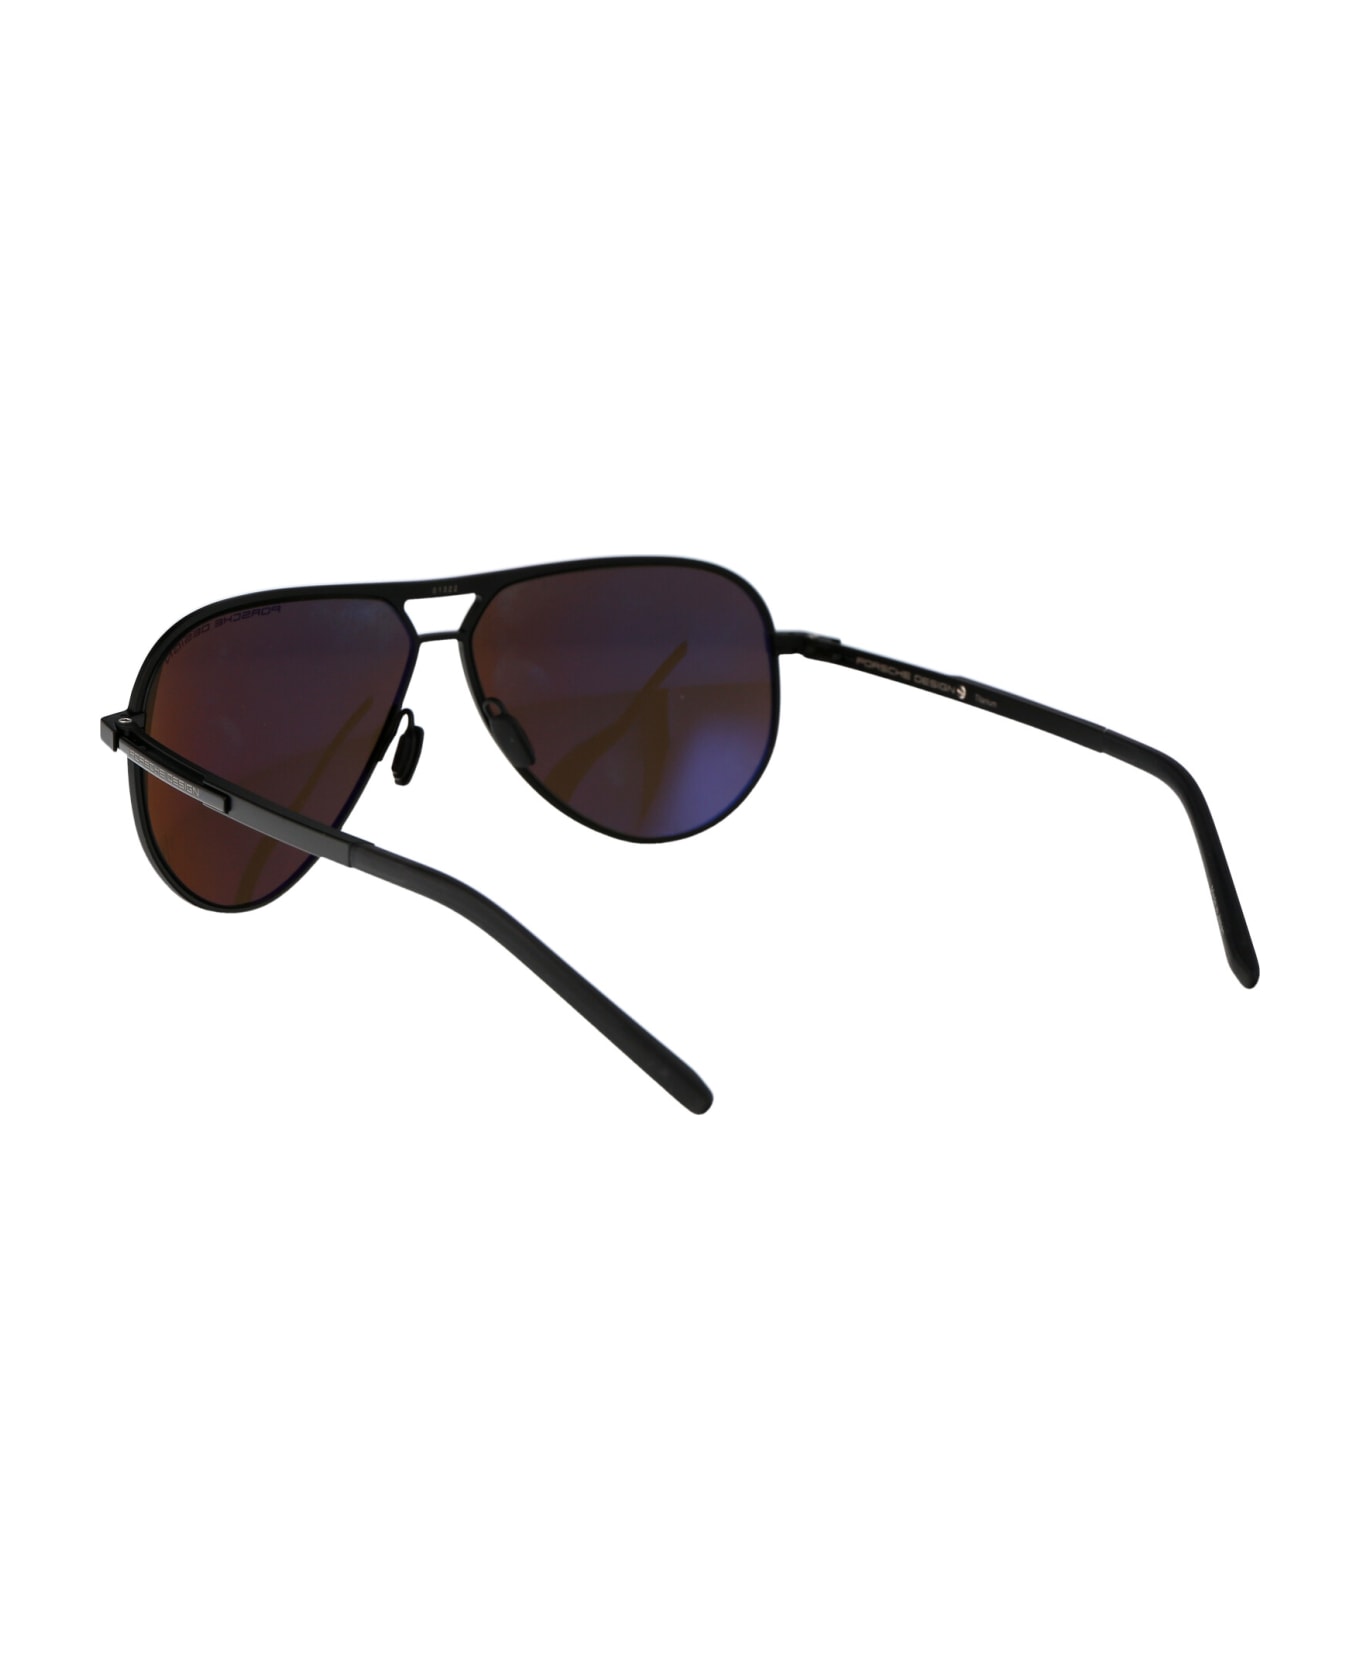 Porsche Design P8942 Sunglasses - A604 BLACK サングラス